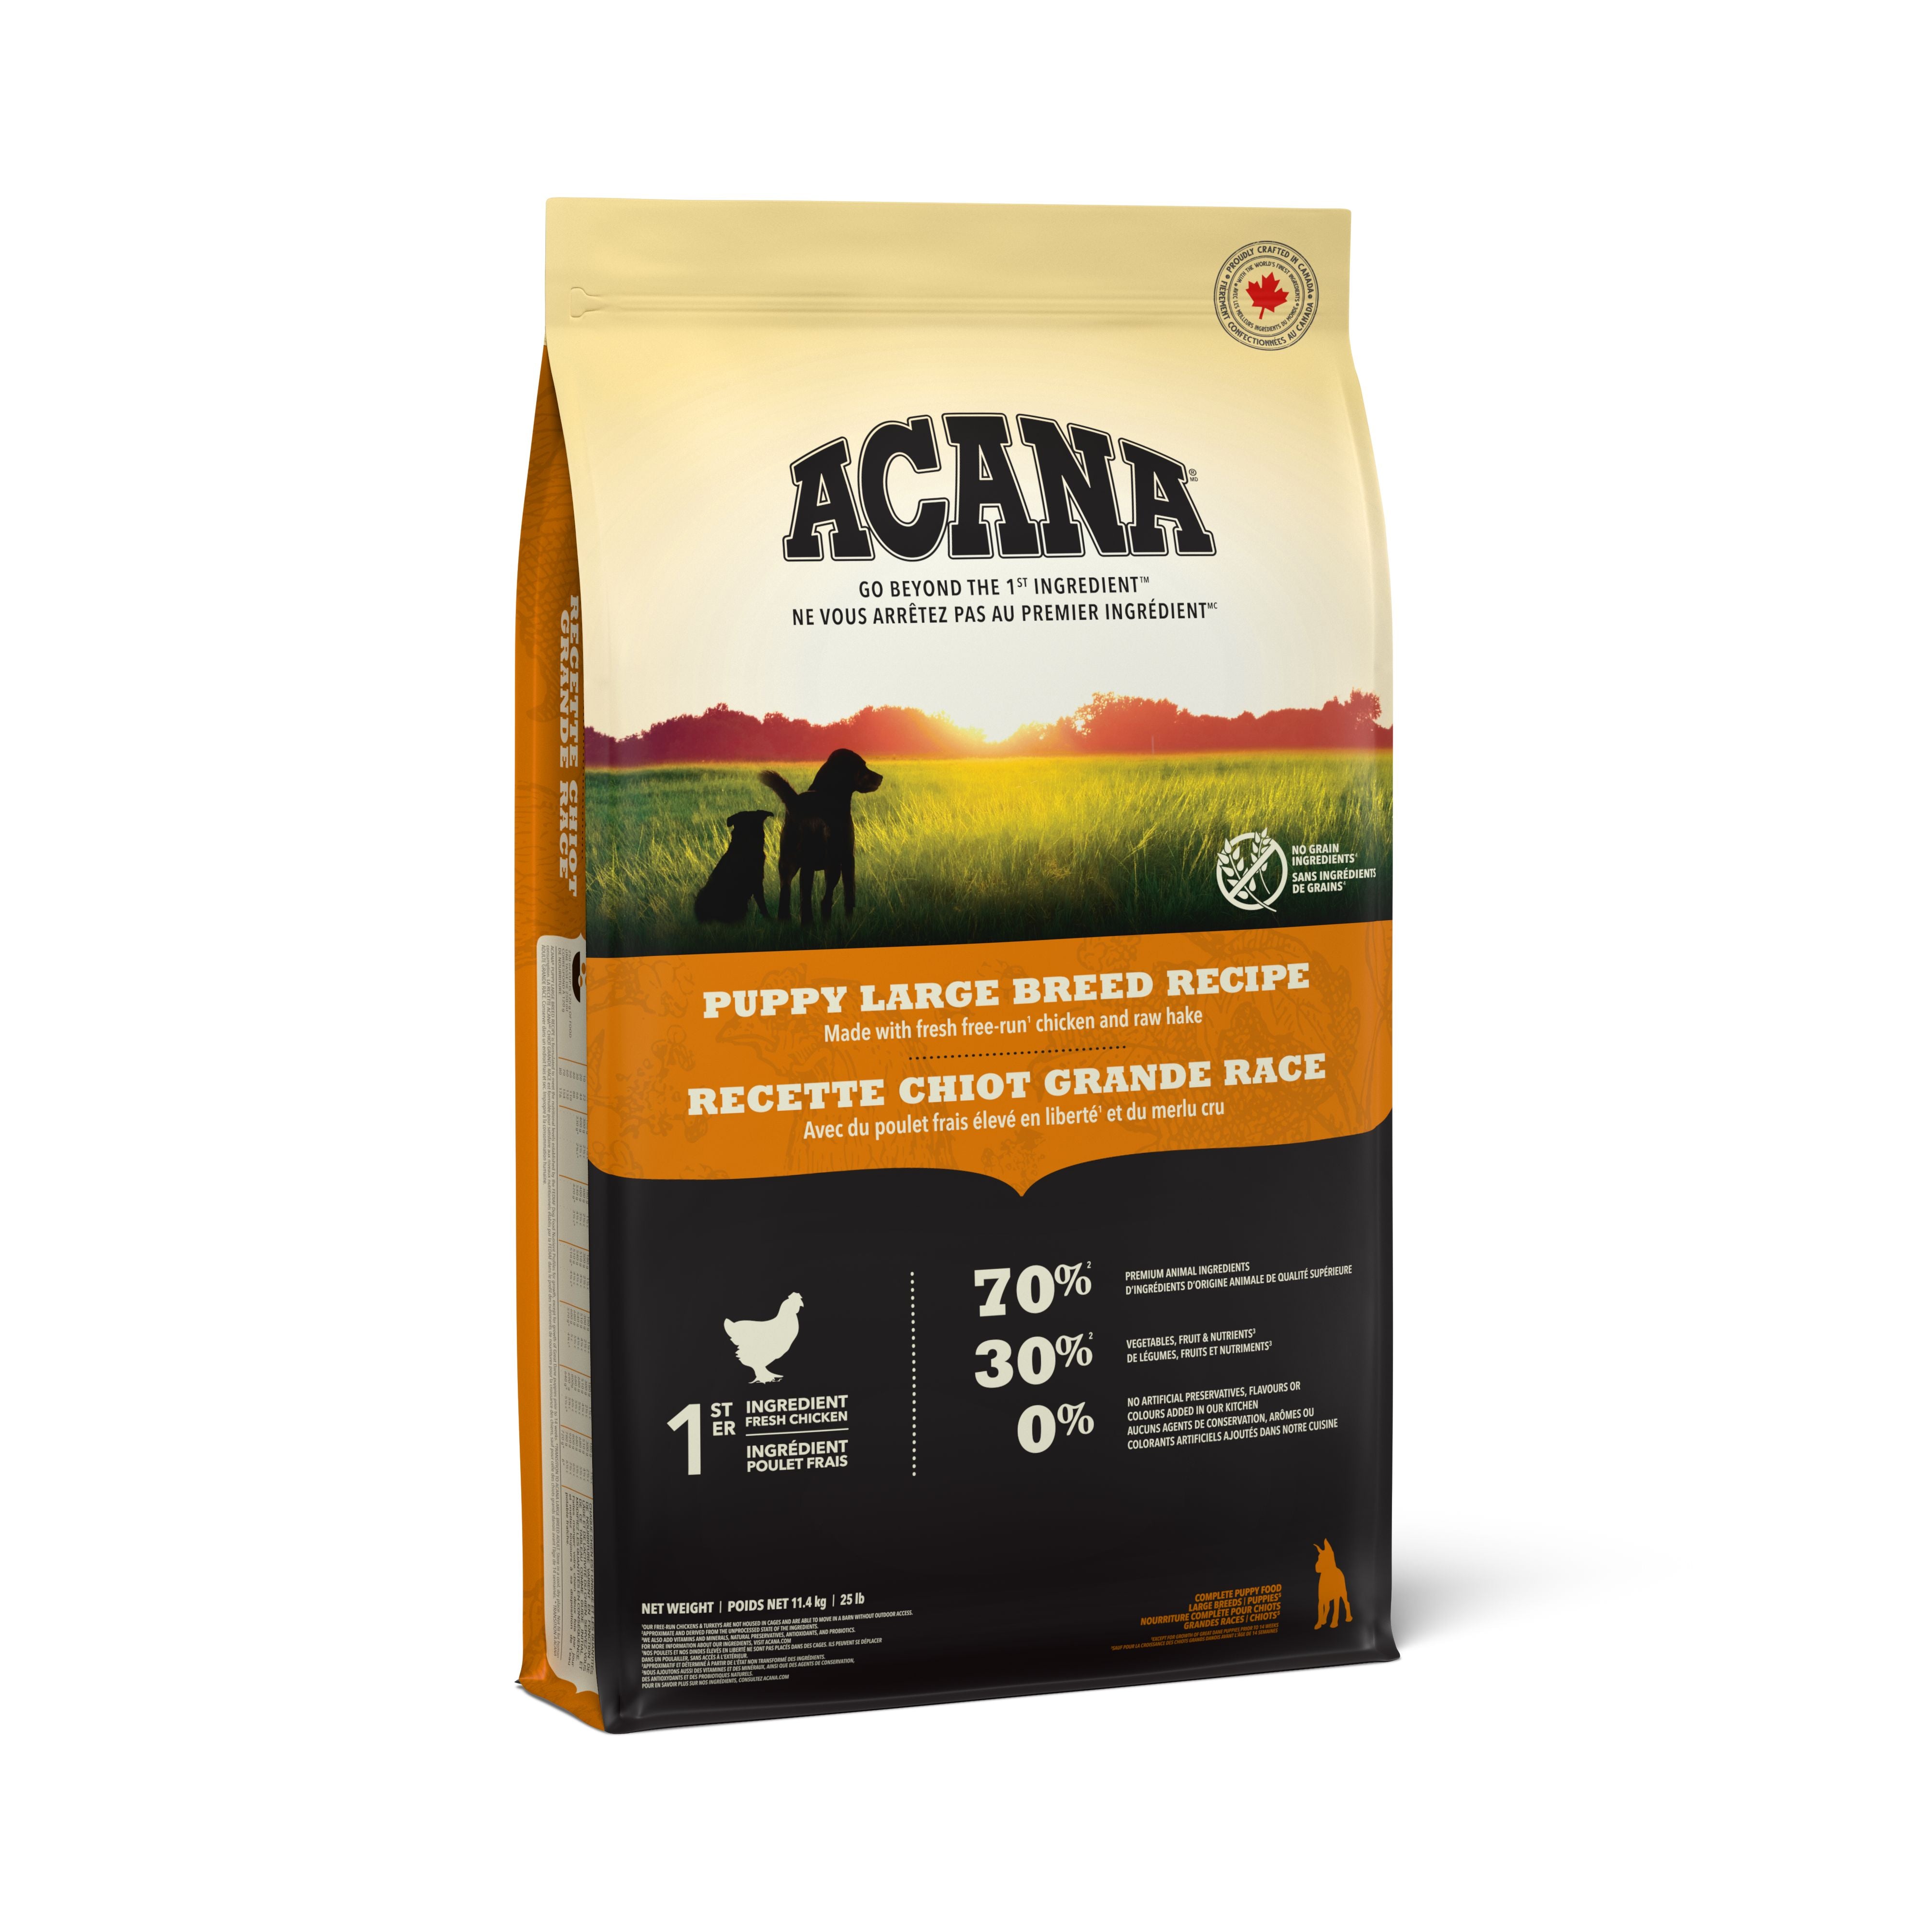 Acana - Puppy Large Breed Recipe (Dry Dog Food)